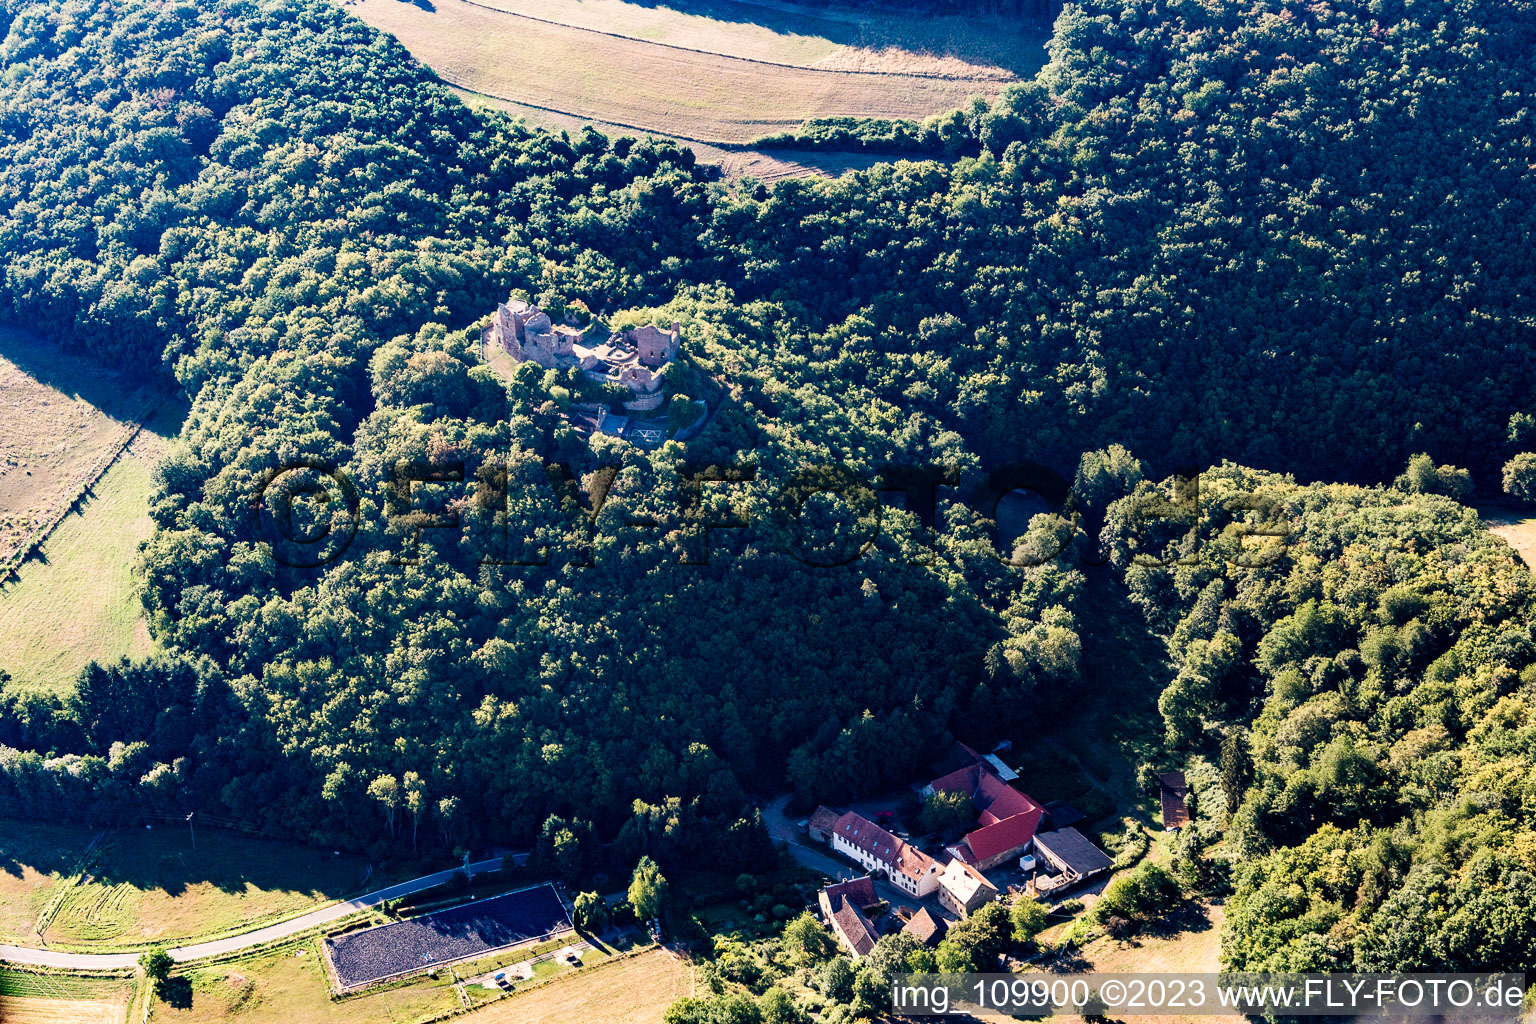 Aerial view of Montfort castle ruins in Hallgarten in the state Rhineland-Palatinate, Germany